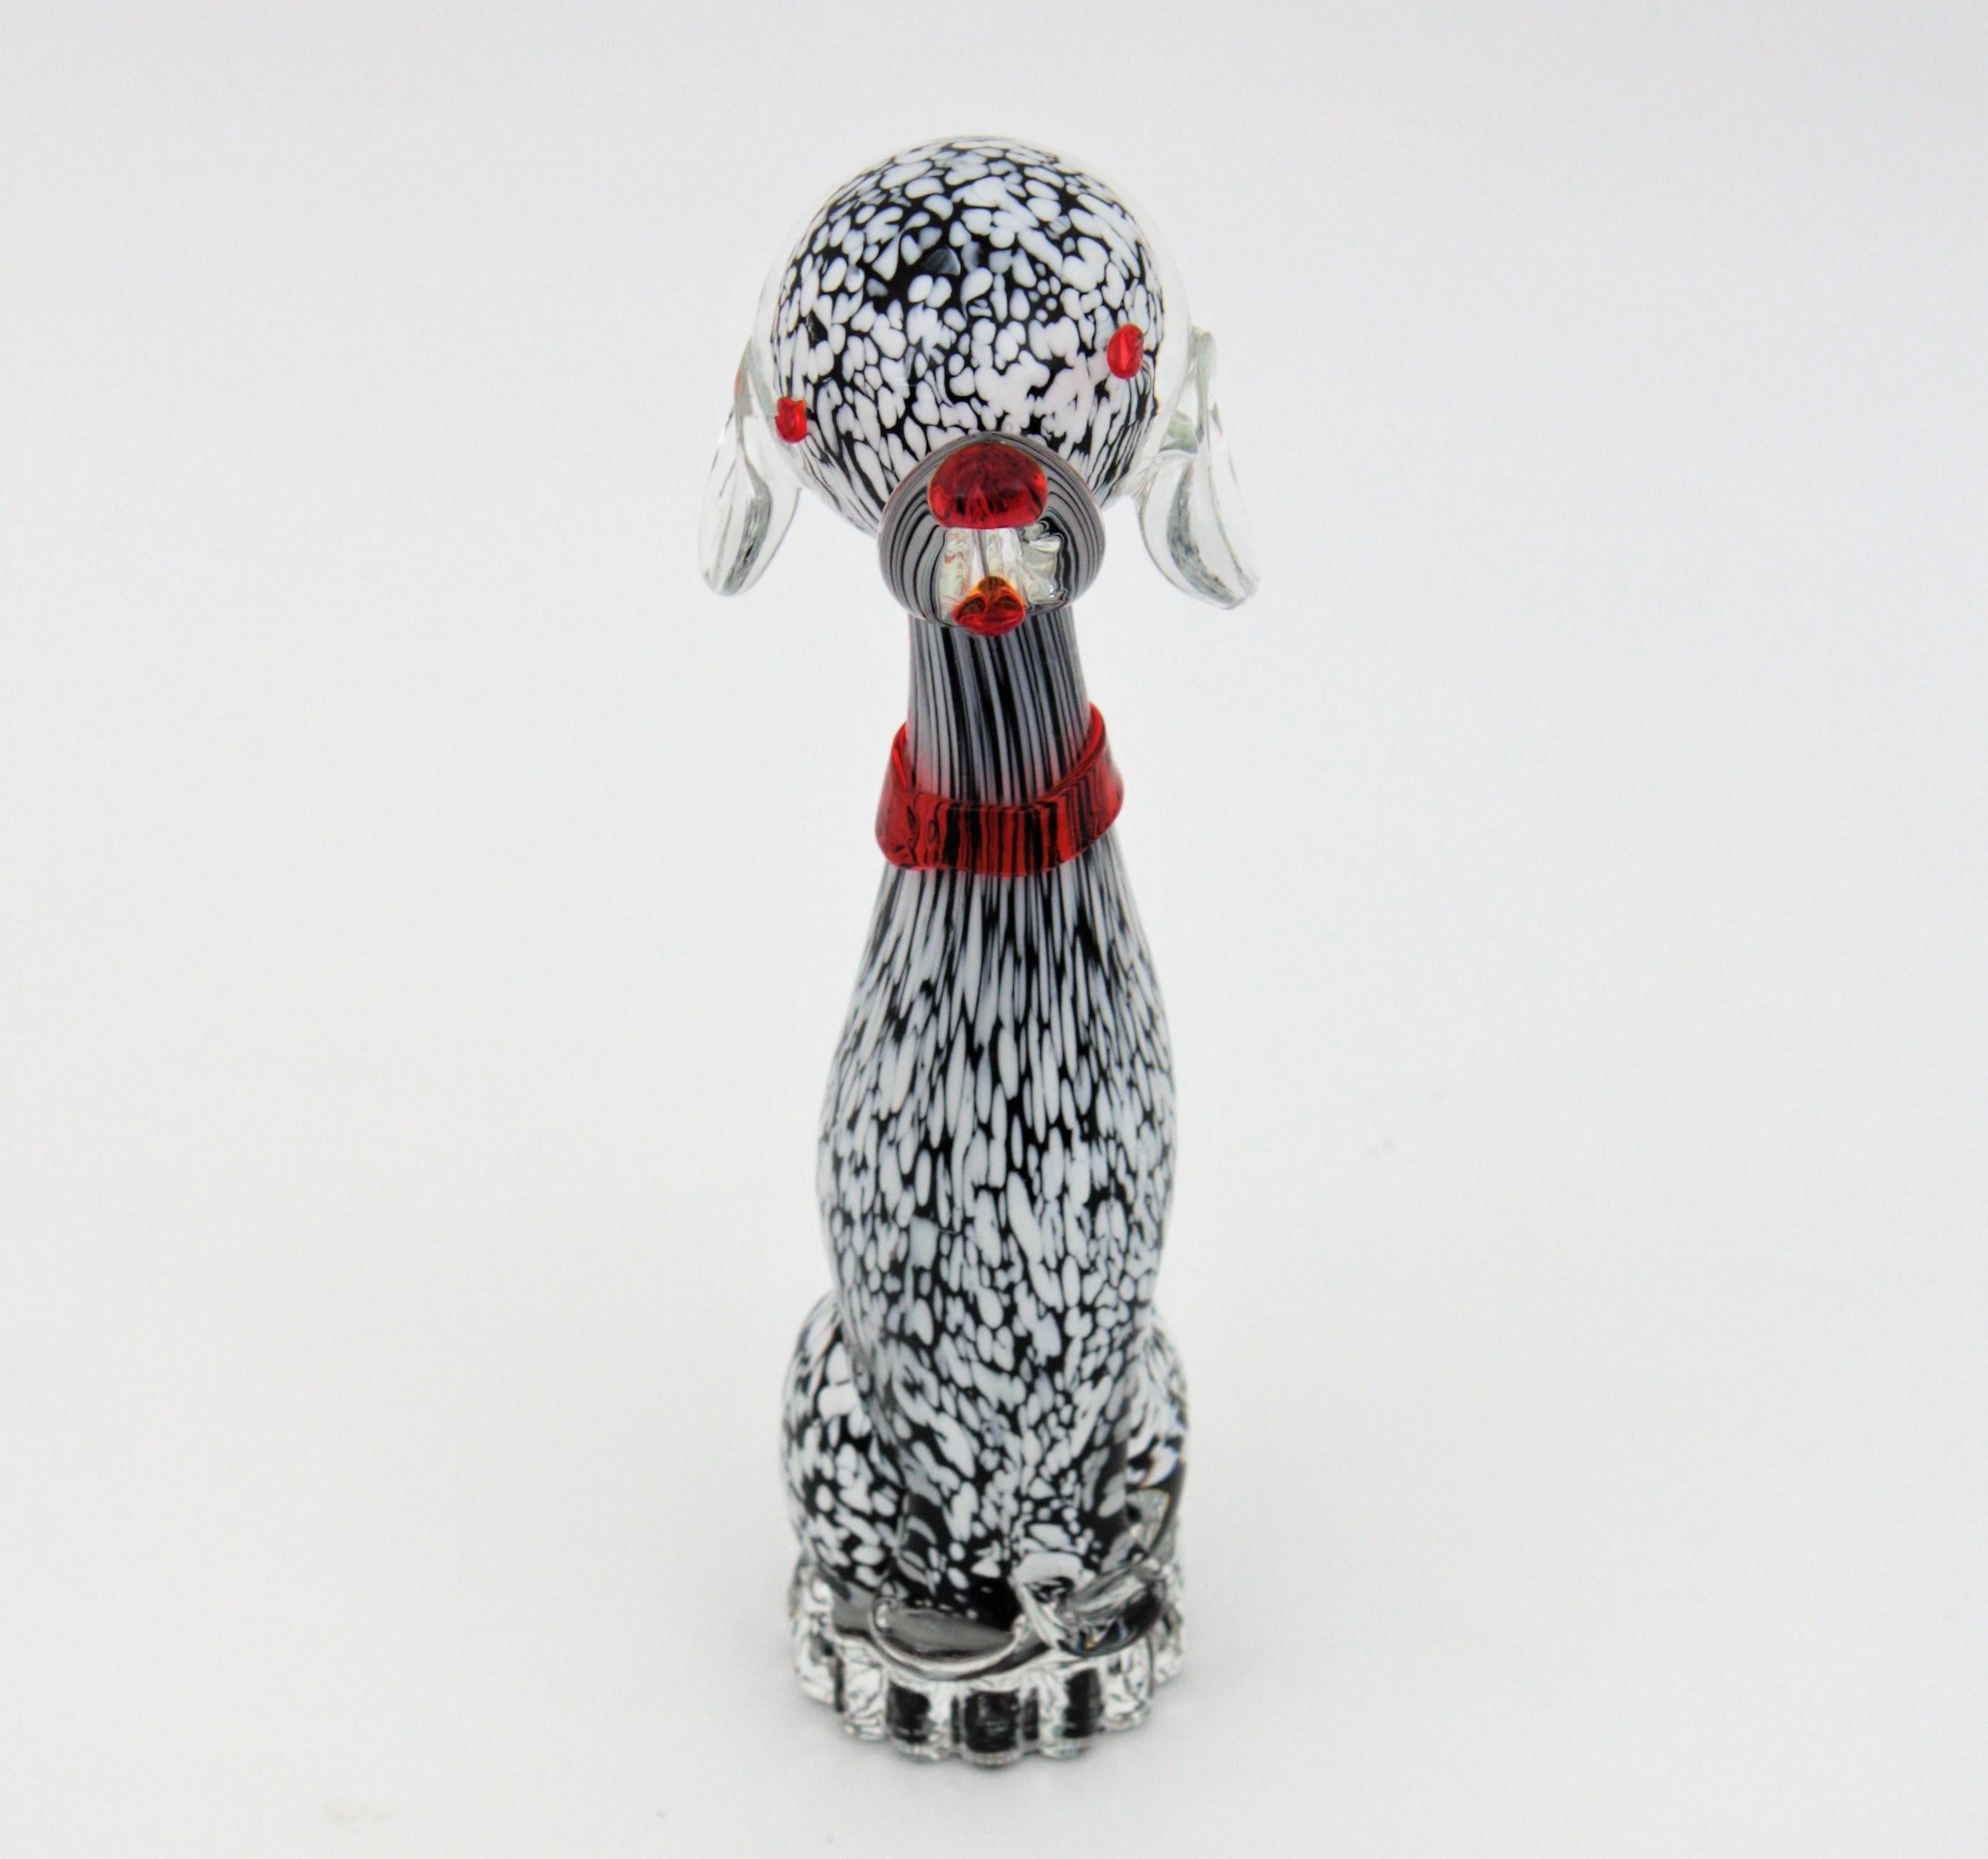 italien Dalmatien Murano Glass Black White Spotted Puppy Dog Figure Paperweight (Presse-papier) en vente